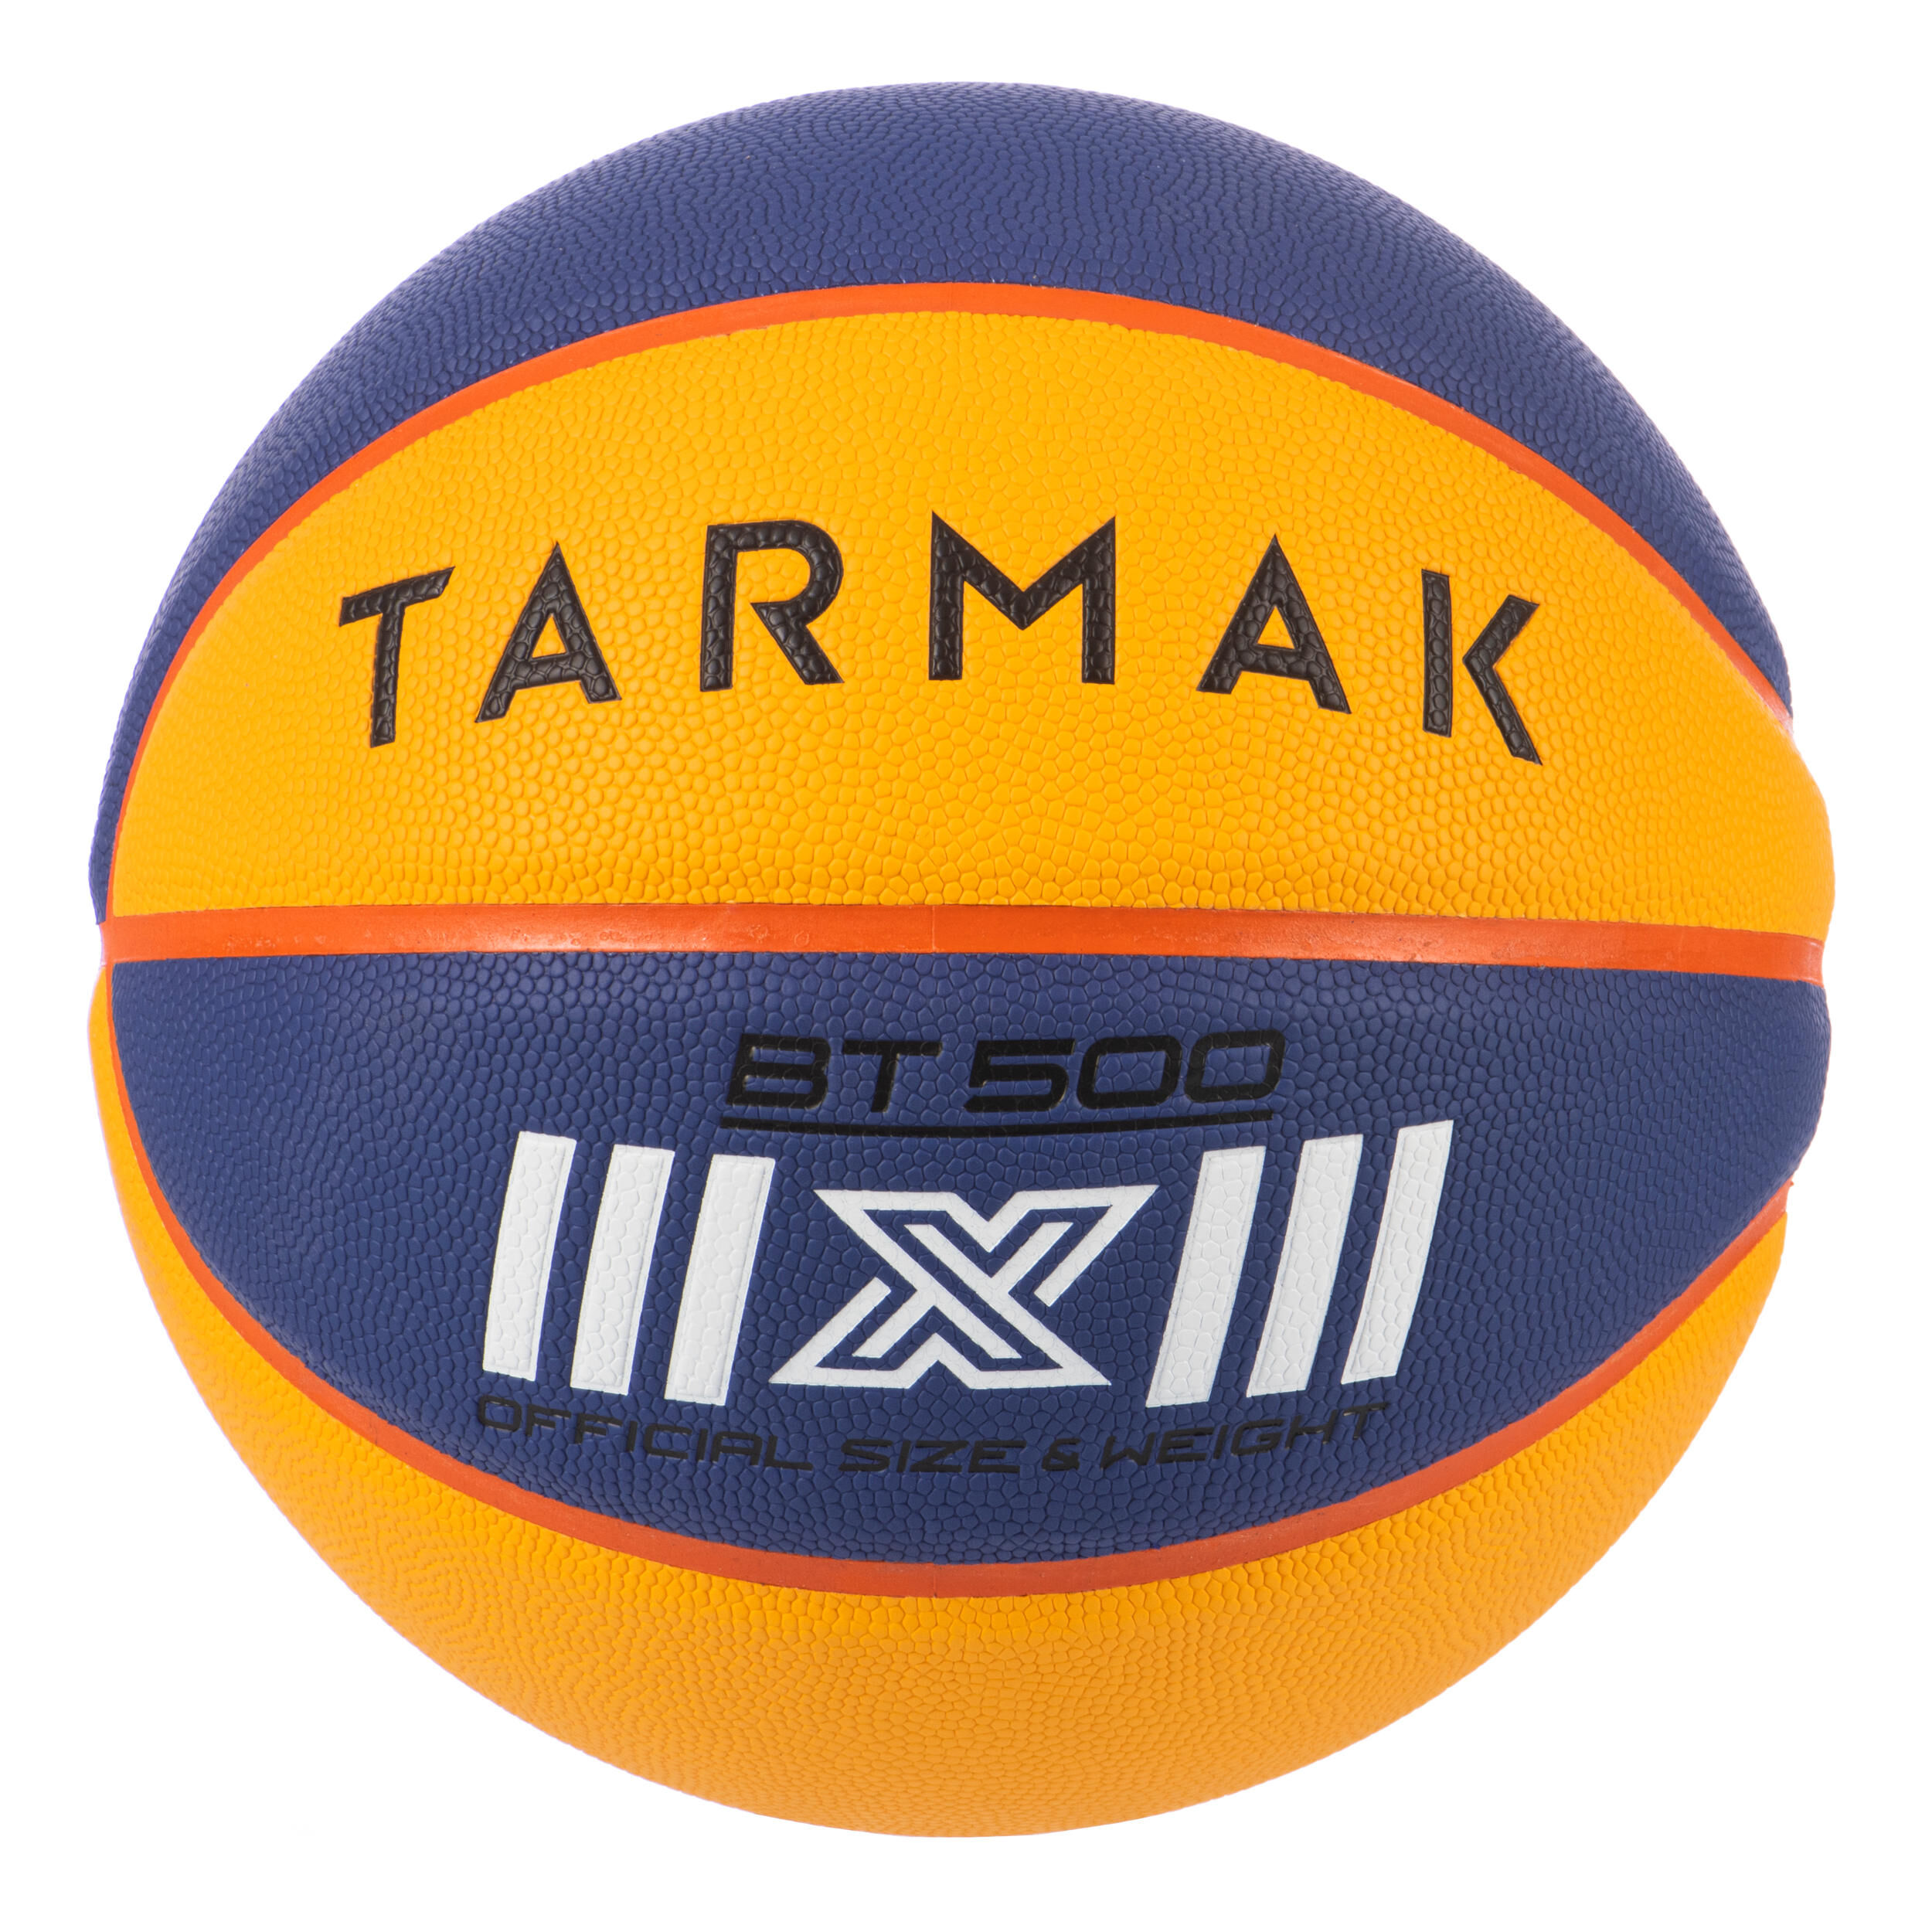 TARMAK Basketball 3x3 Size 6 BT 500 - Blue/Yellow